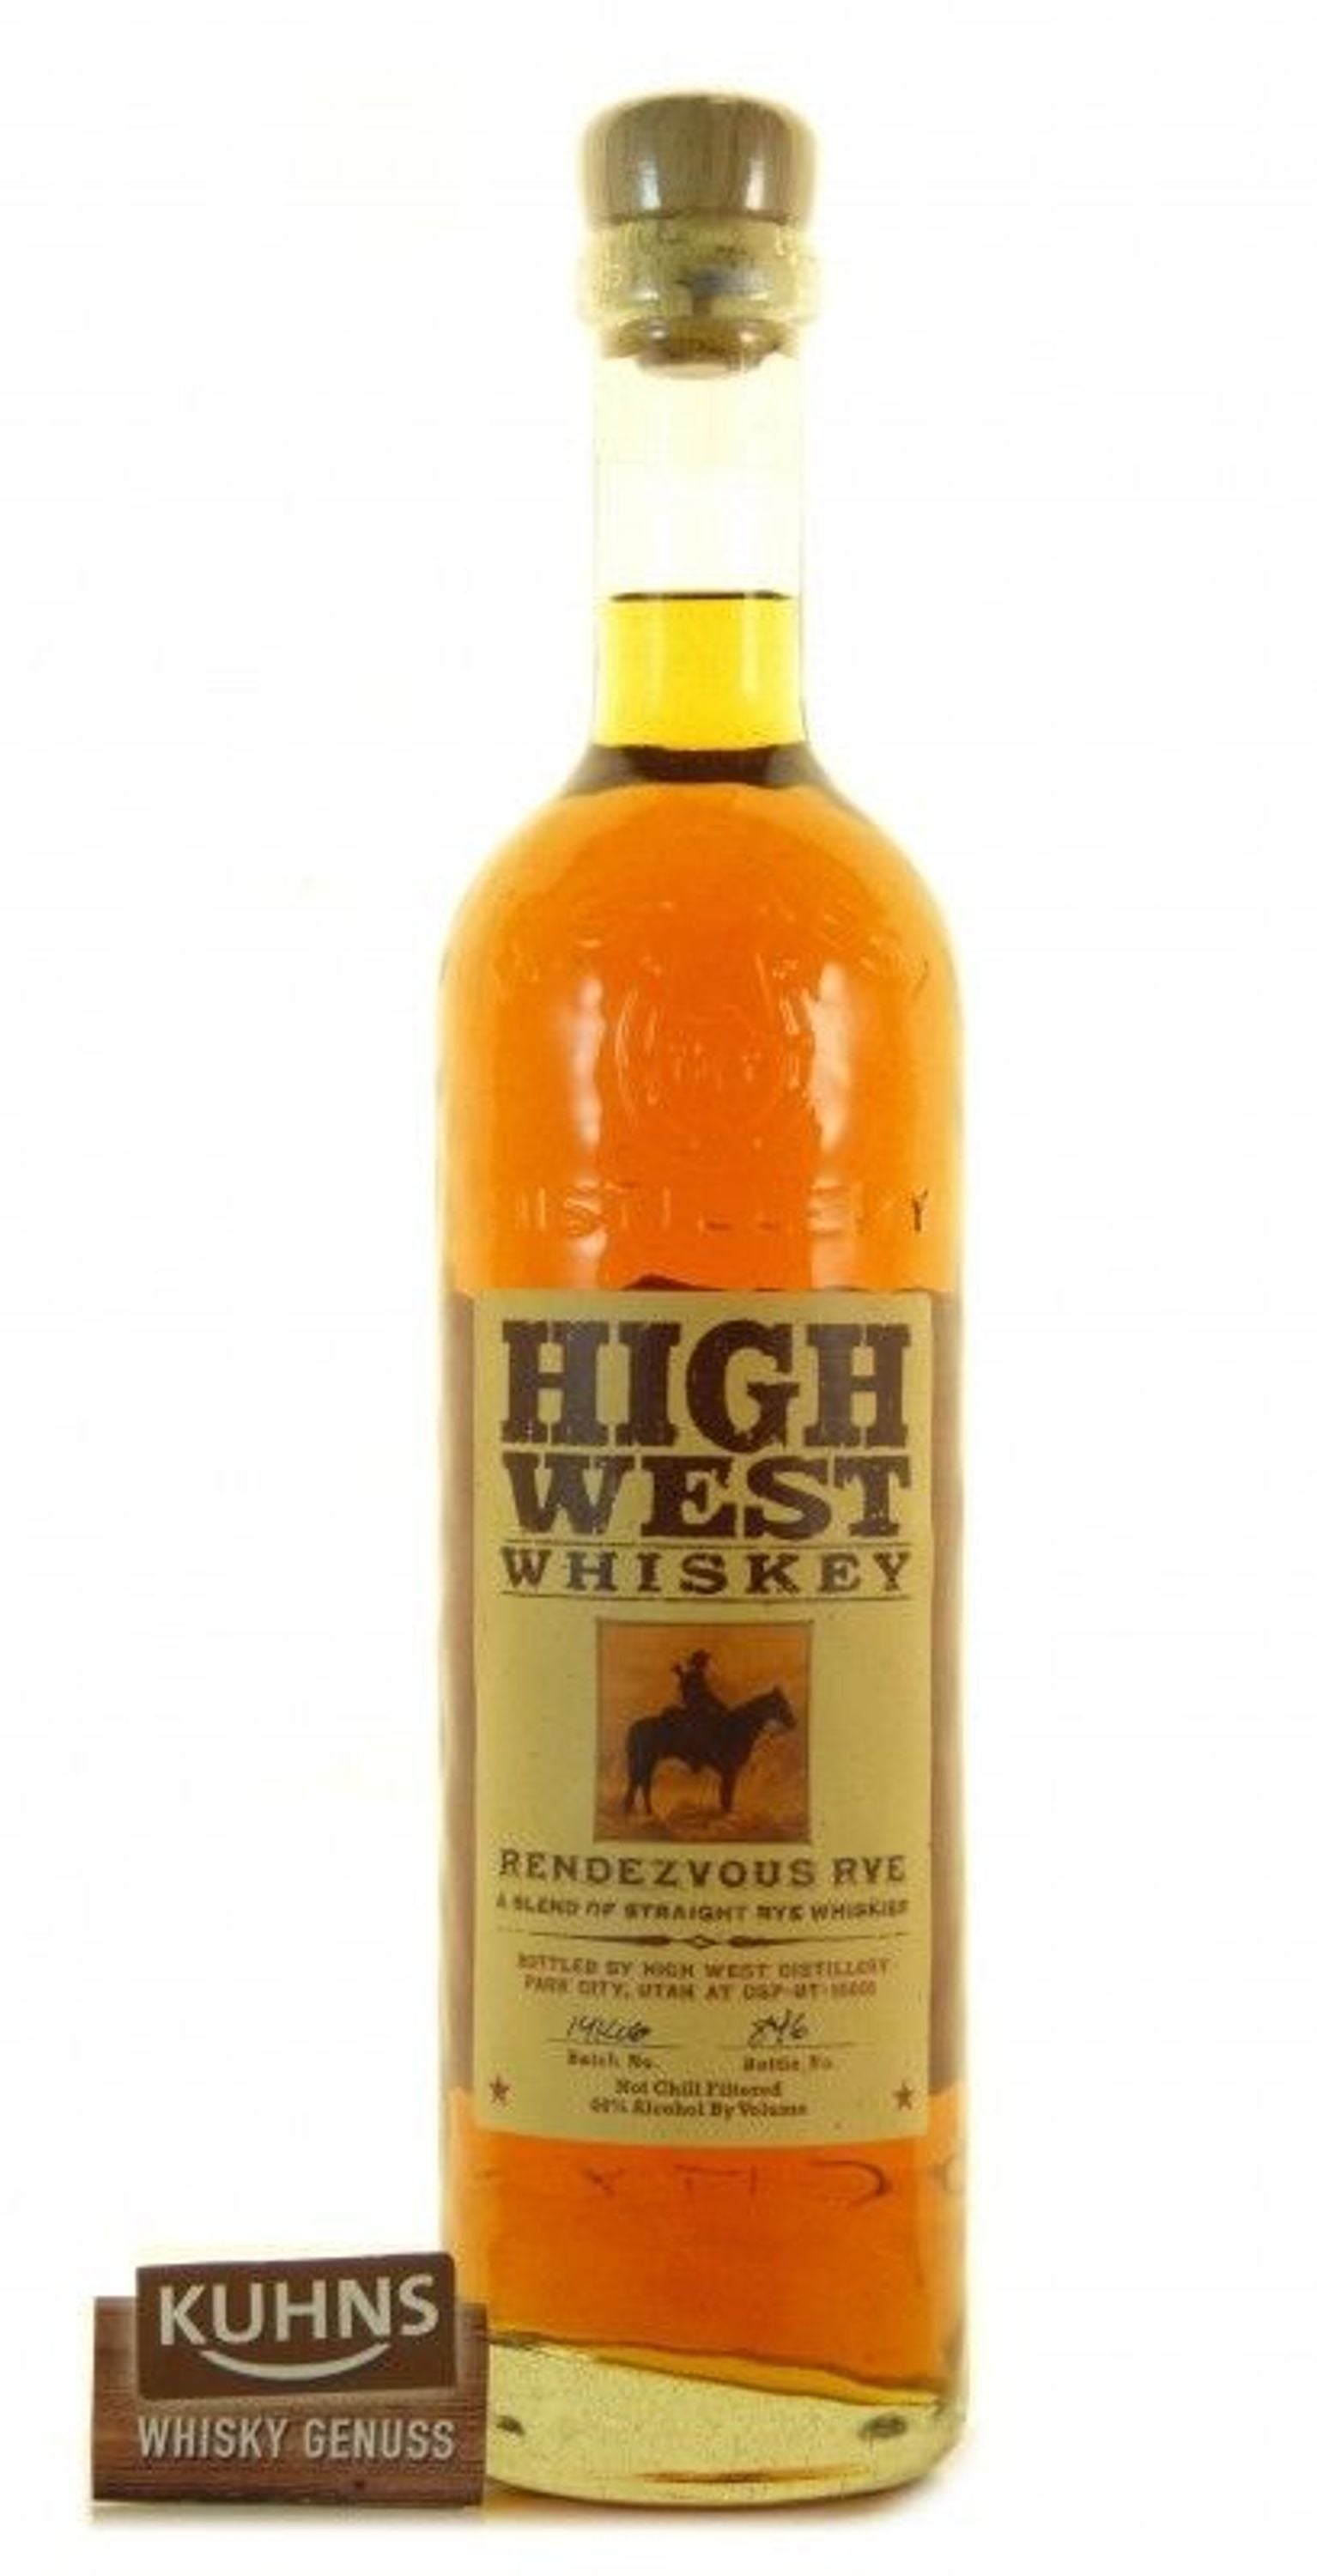 High West Rendezvous Rye Whiskey 0.7l, alc. 46% ABV, USA Rye Whiskey